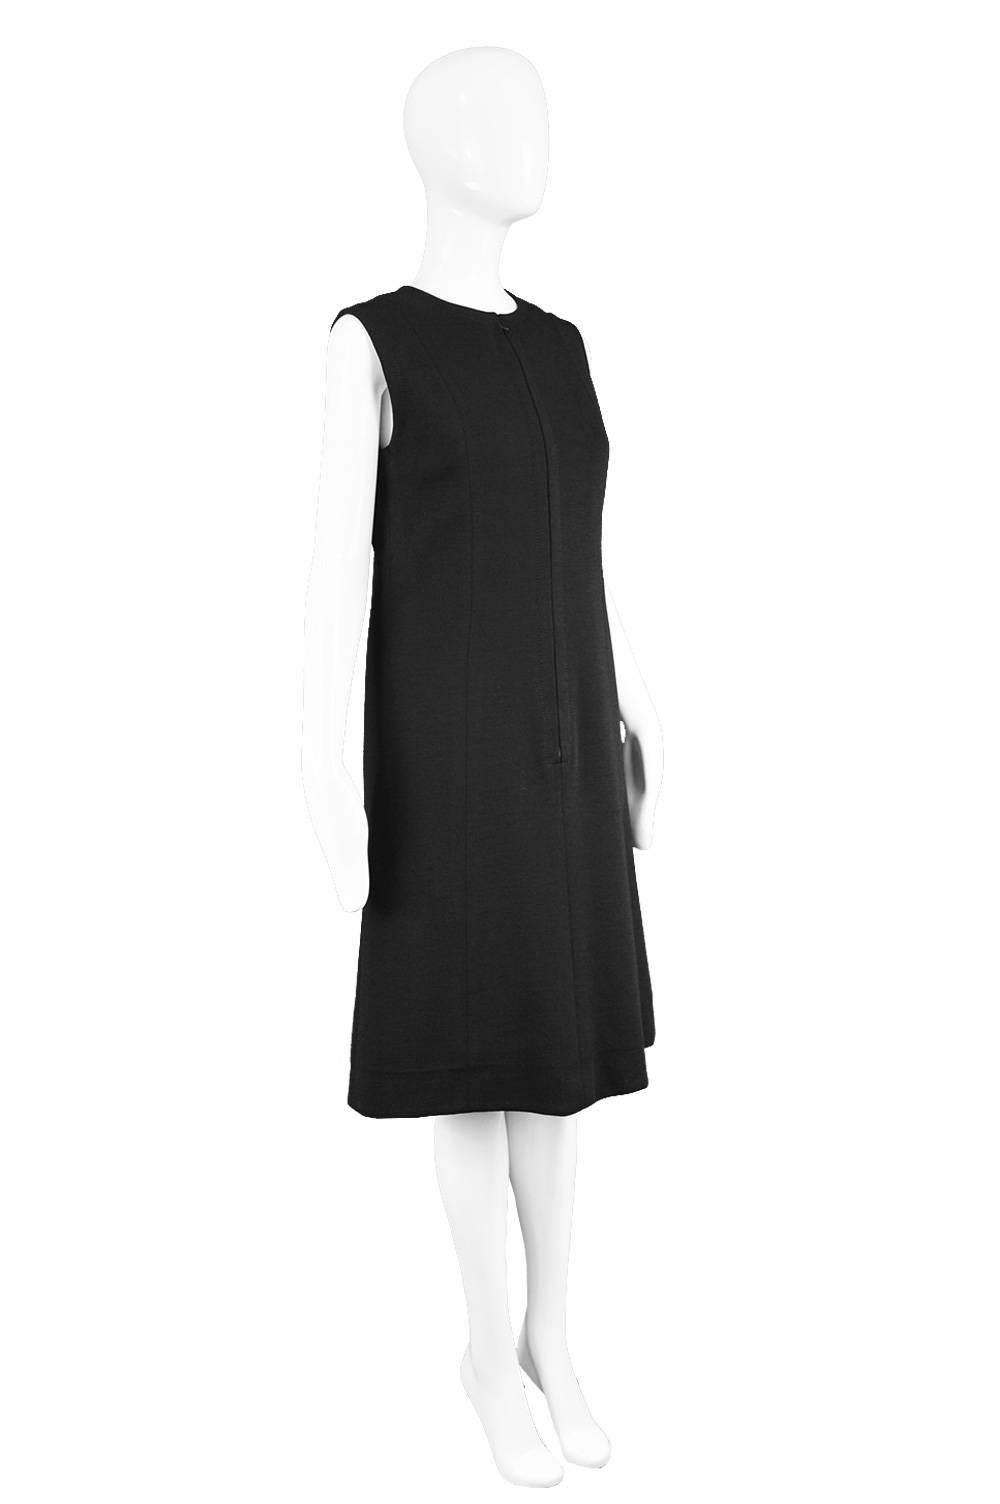 Jean Patou Vintage 1960s Black Wool Sleeveless Mod Minimalist Shift Dress  For Sale 1